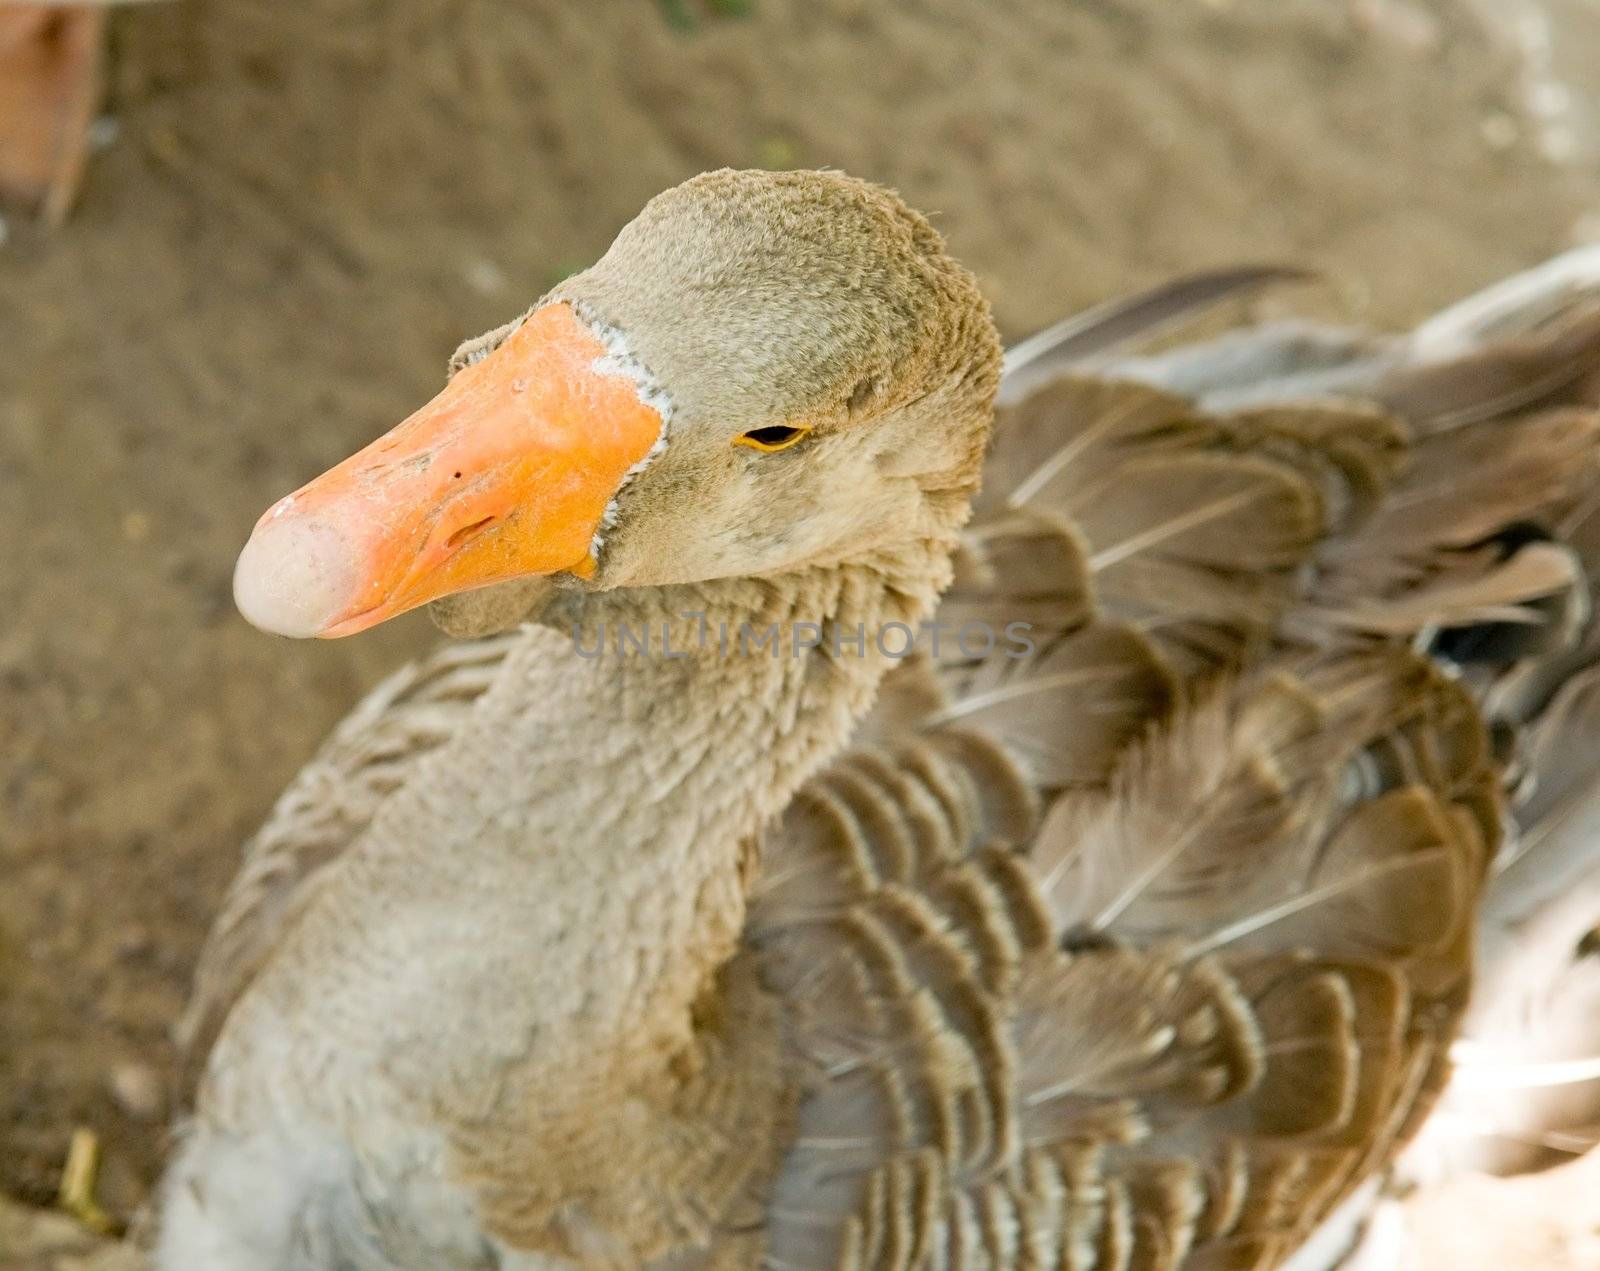 The big goose with an orange beak